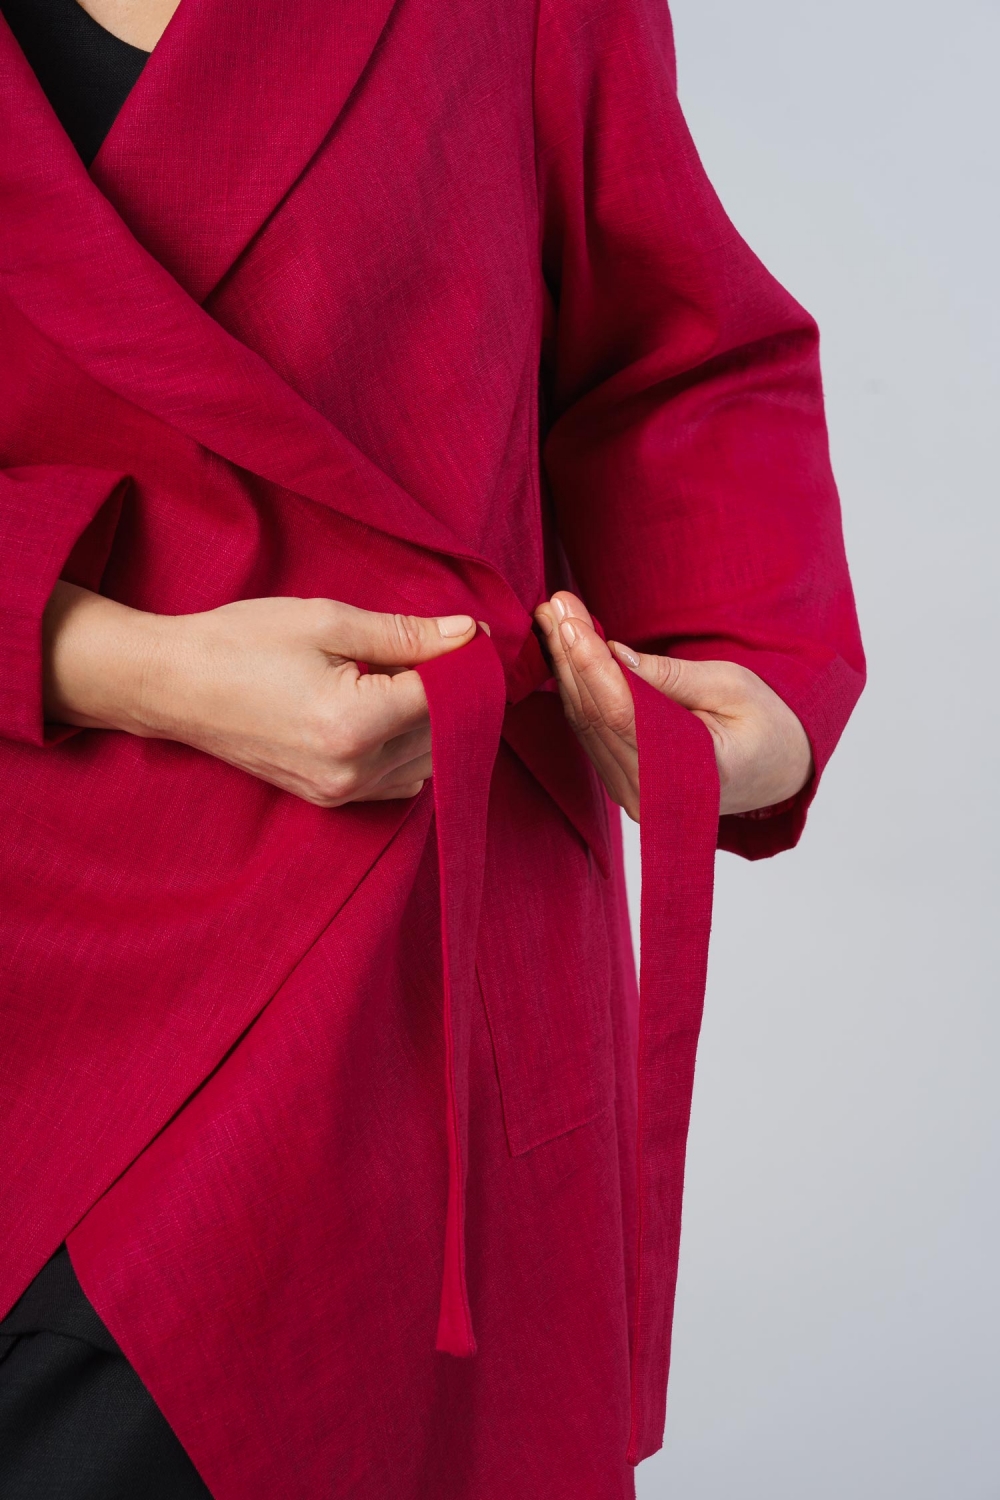 Treason Jacke in A-Form aus Leinen in fuchsia pink